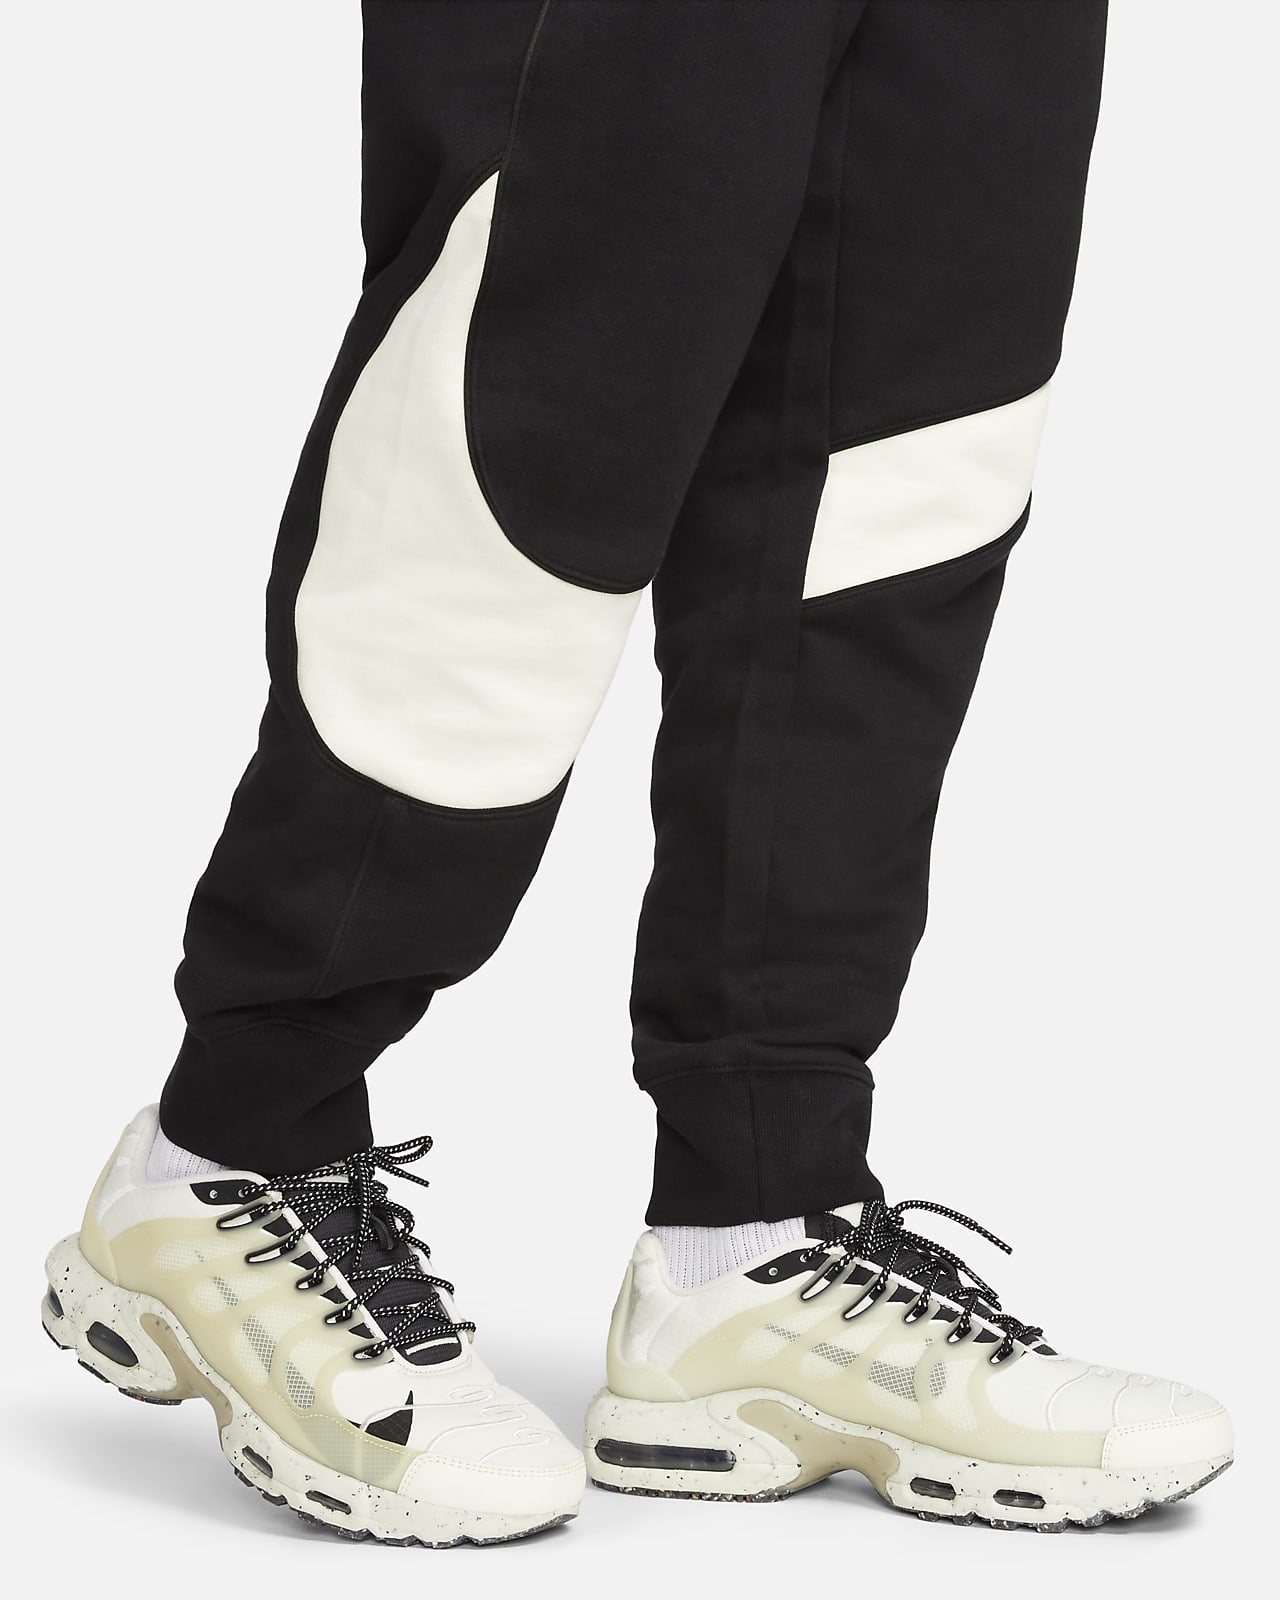 Nike Big Swoosh Fleece Tracksuit Mens Size XL Matching Sweatsuit Outfit  Black